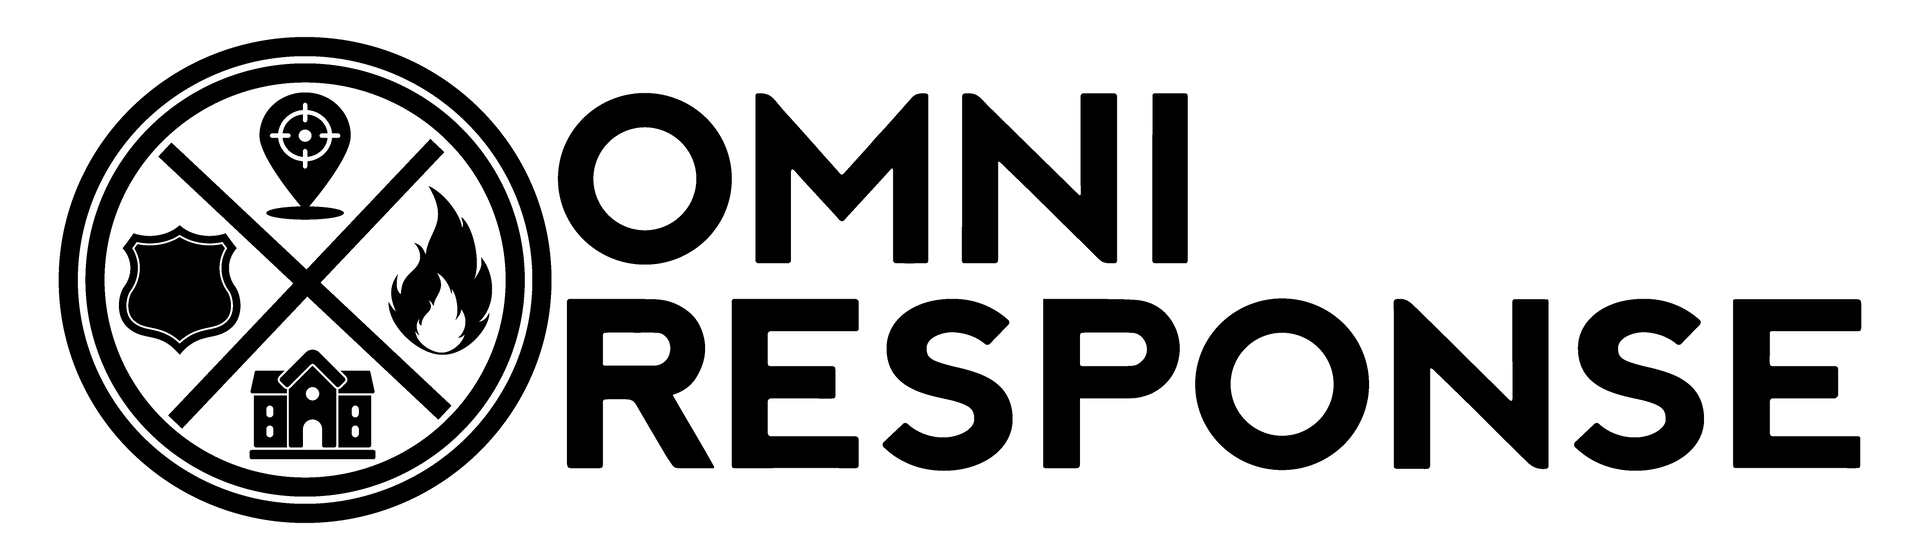 A black and white logo for omni response